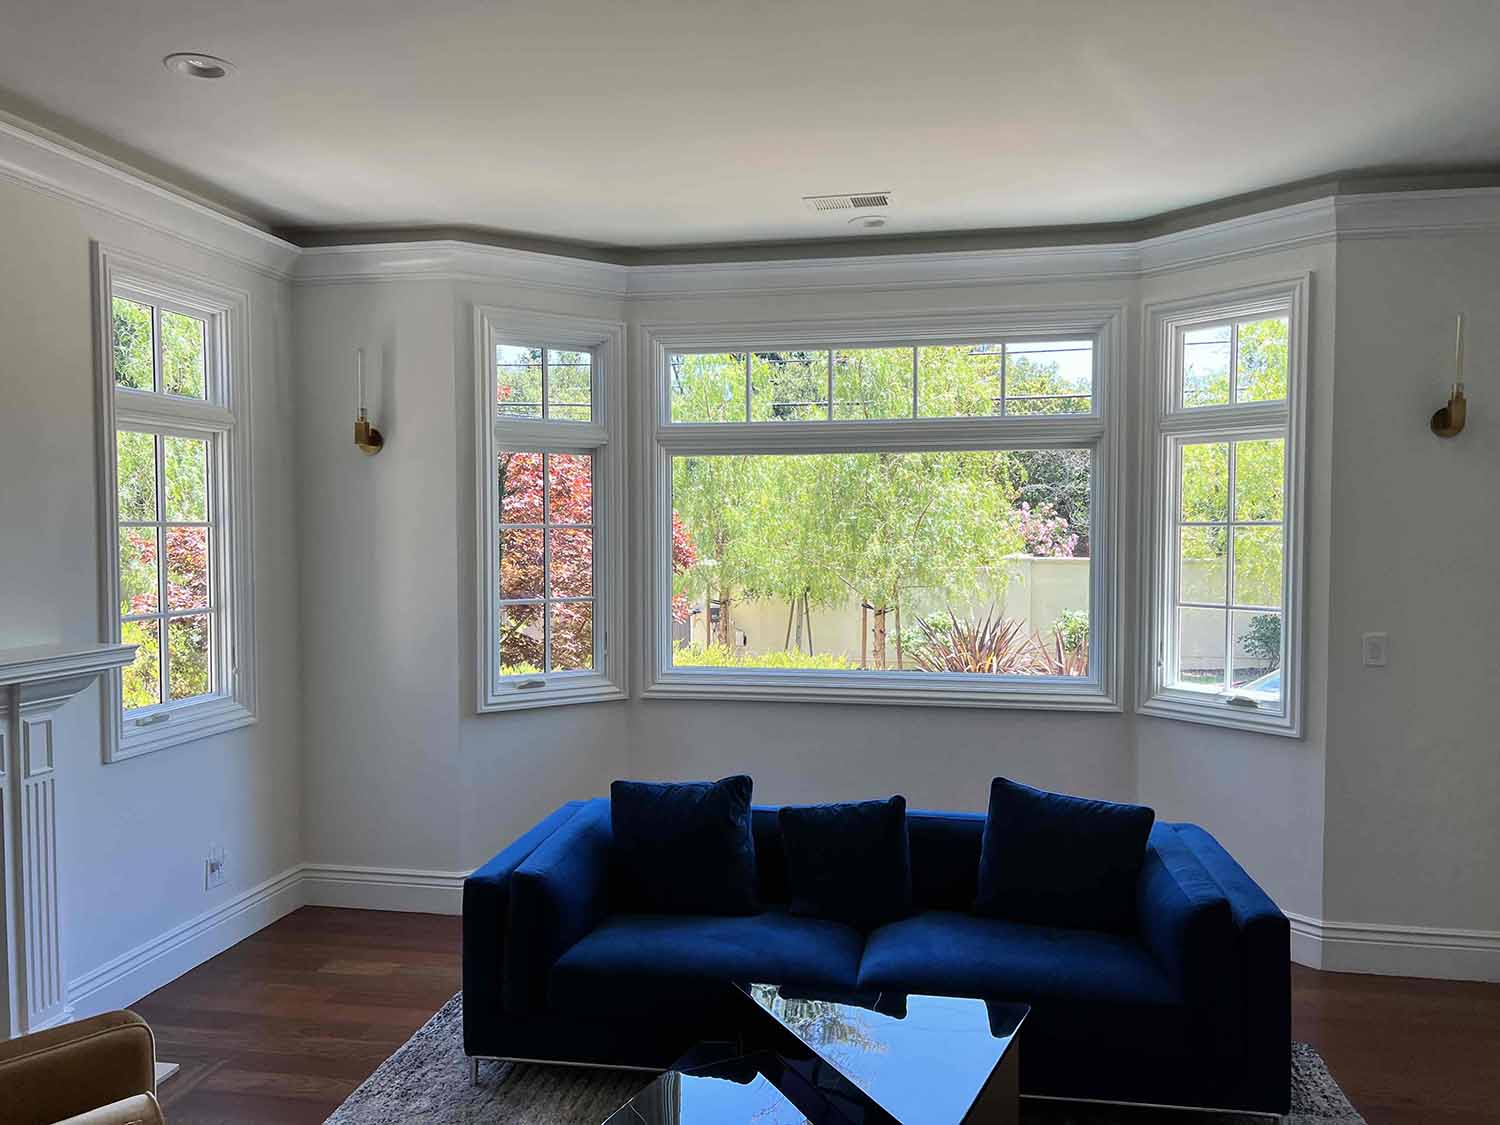 ClimatePro installs the best window film in Atherton, CA, homes: 3M Window Film.